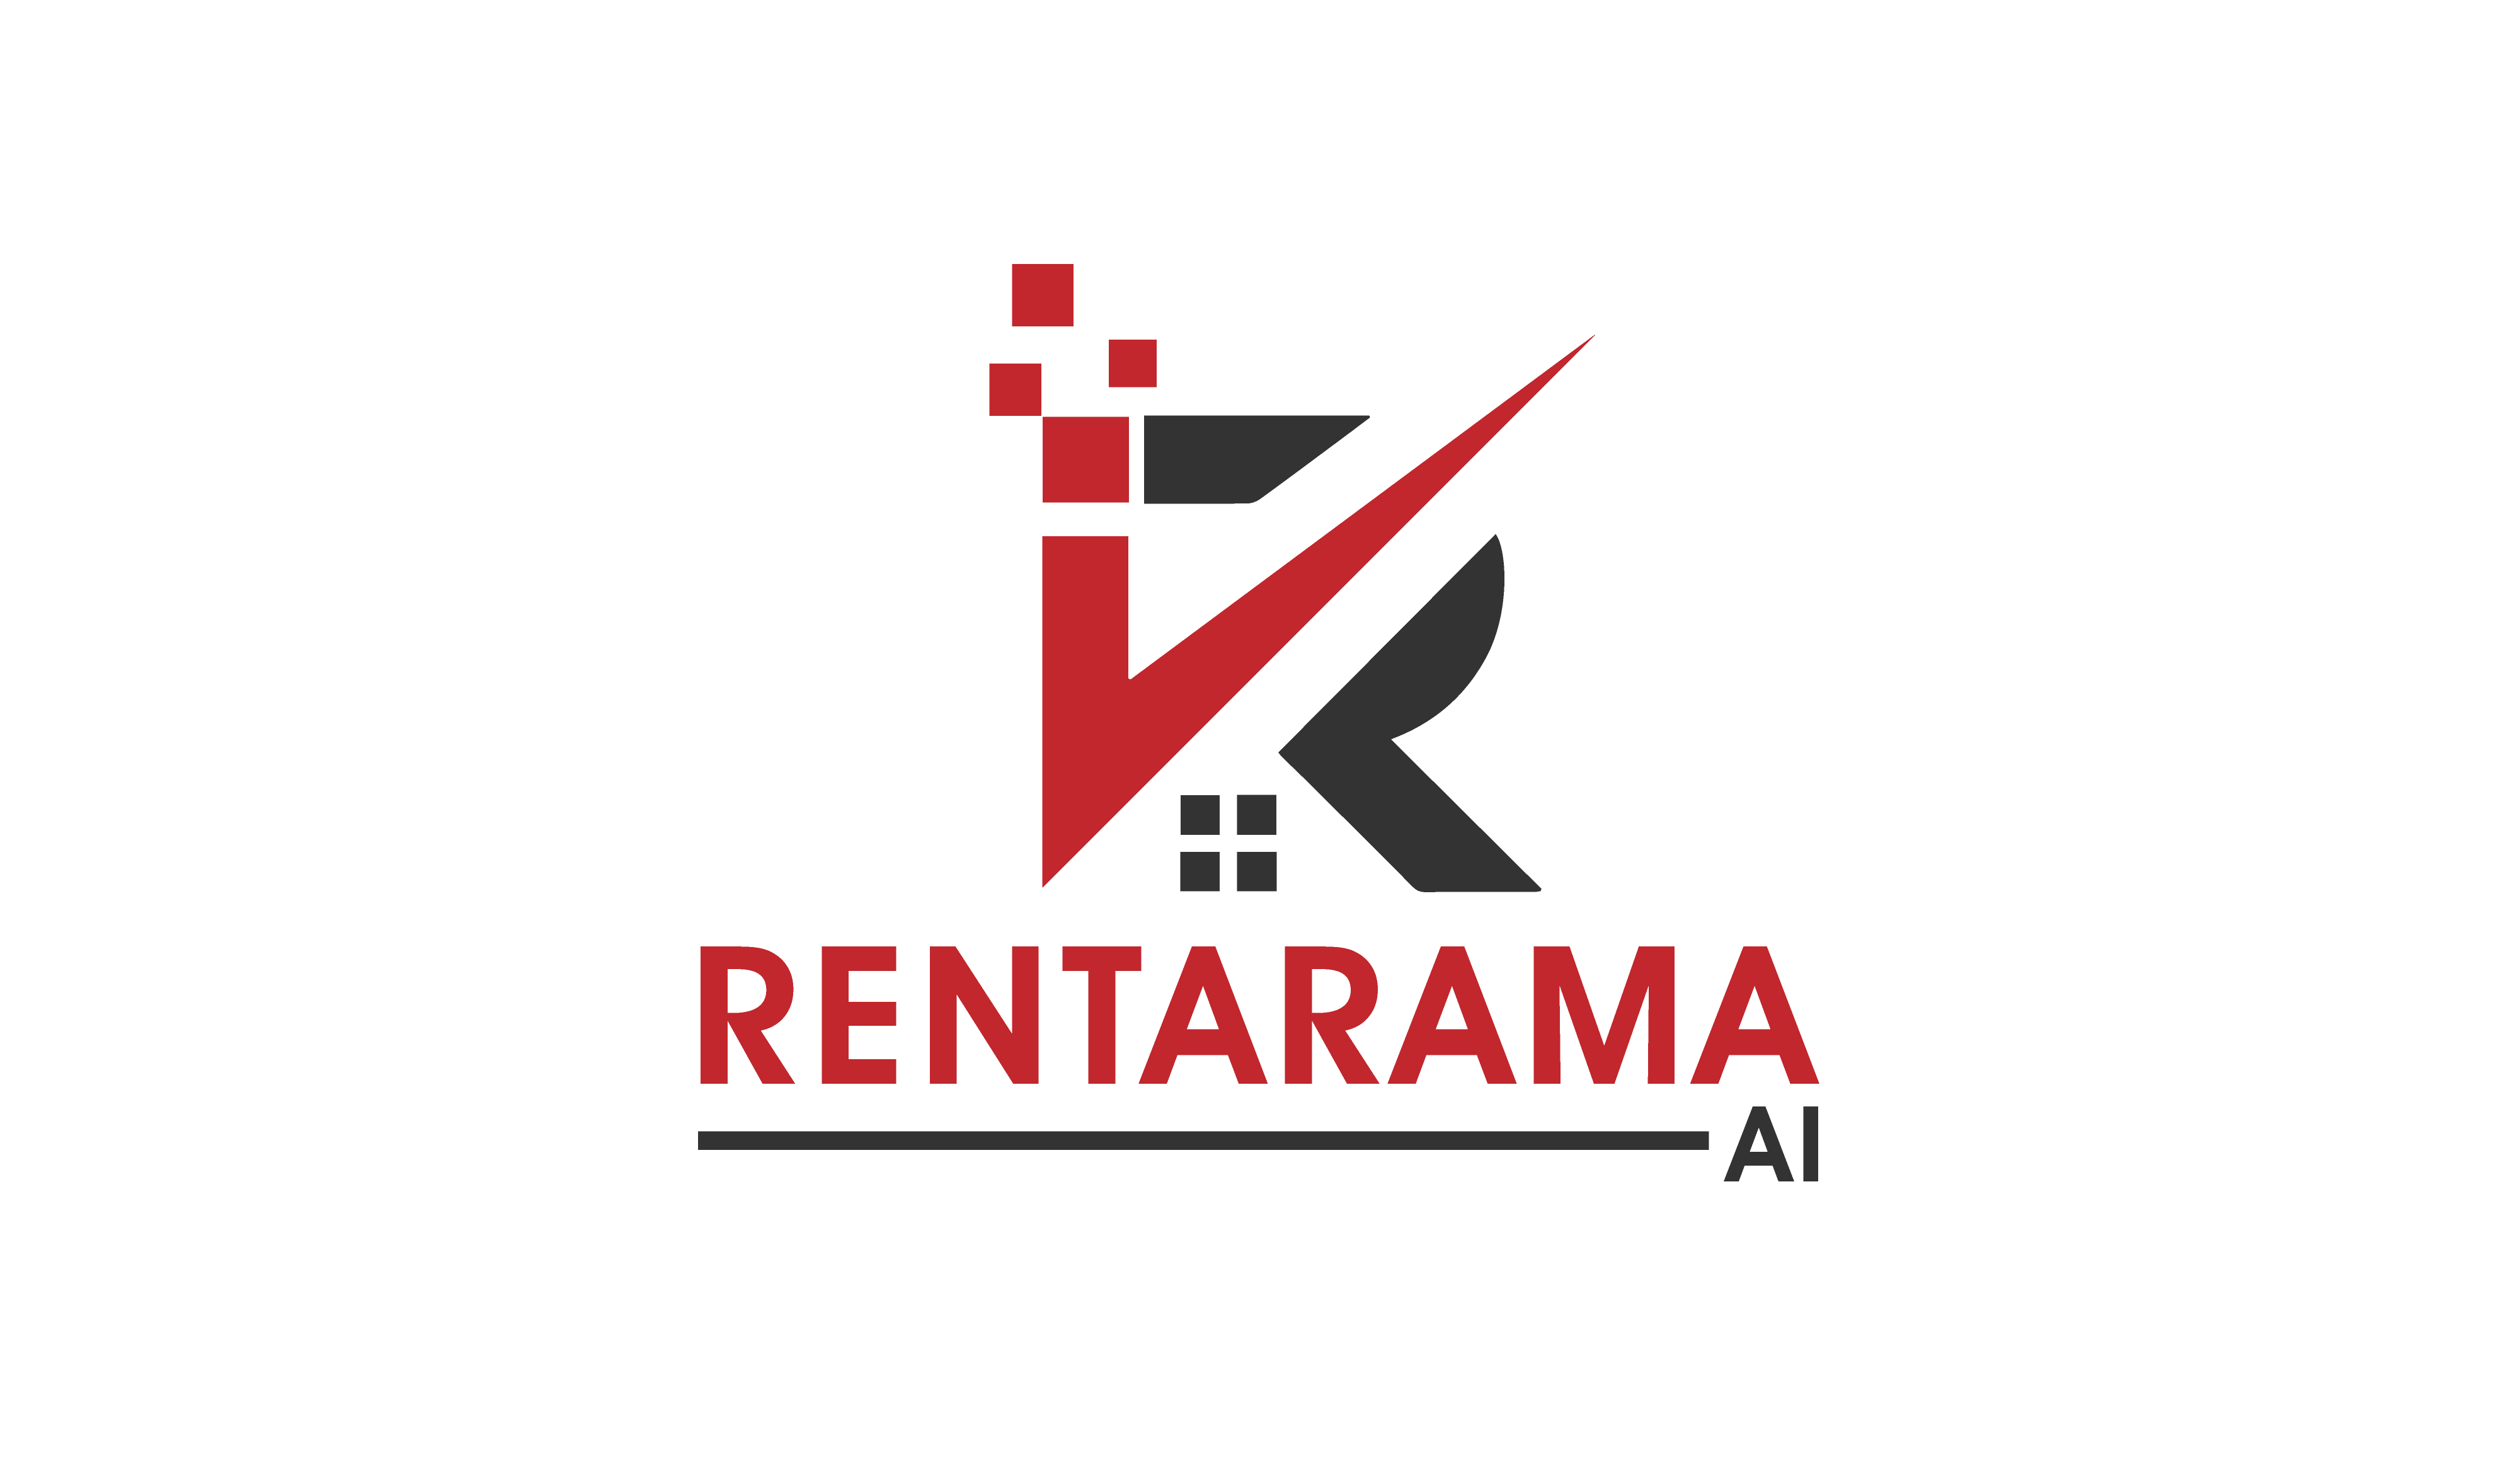 Rent-a-Rama AI